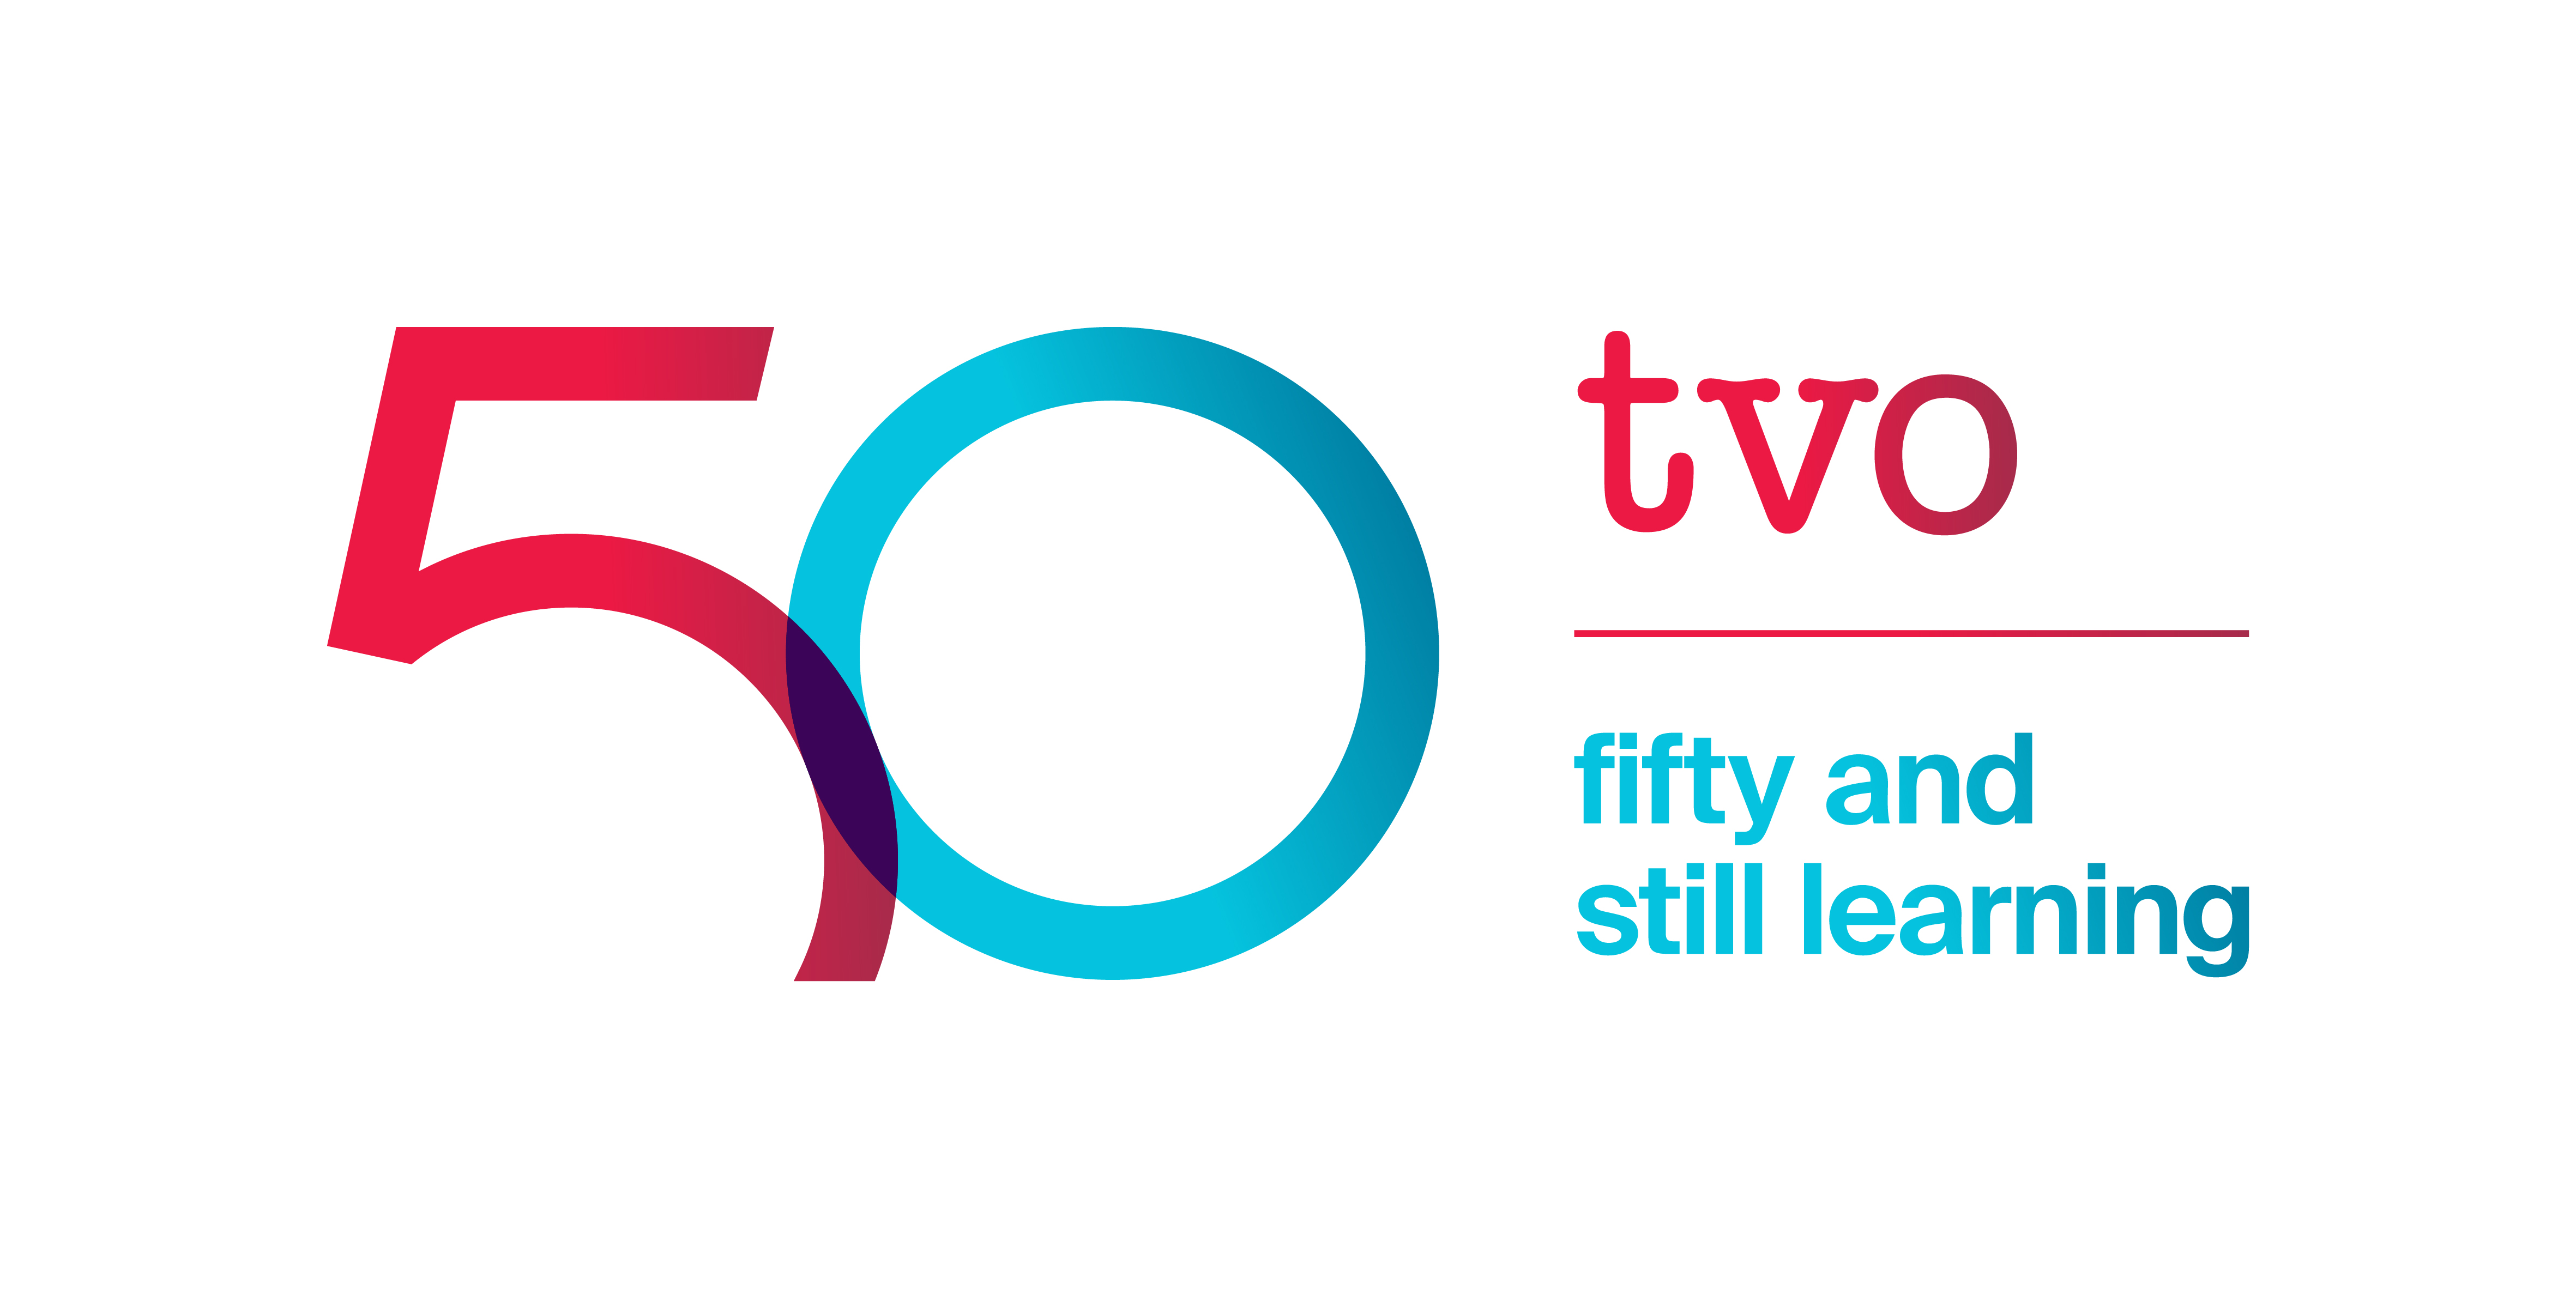 TVO to Host Ontario 